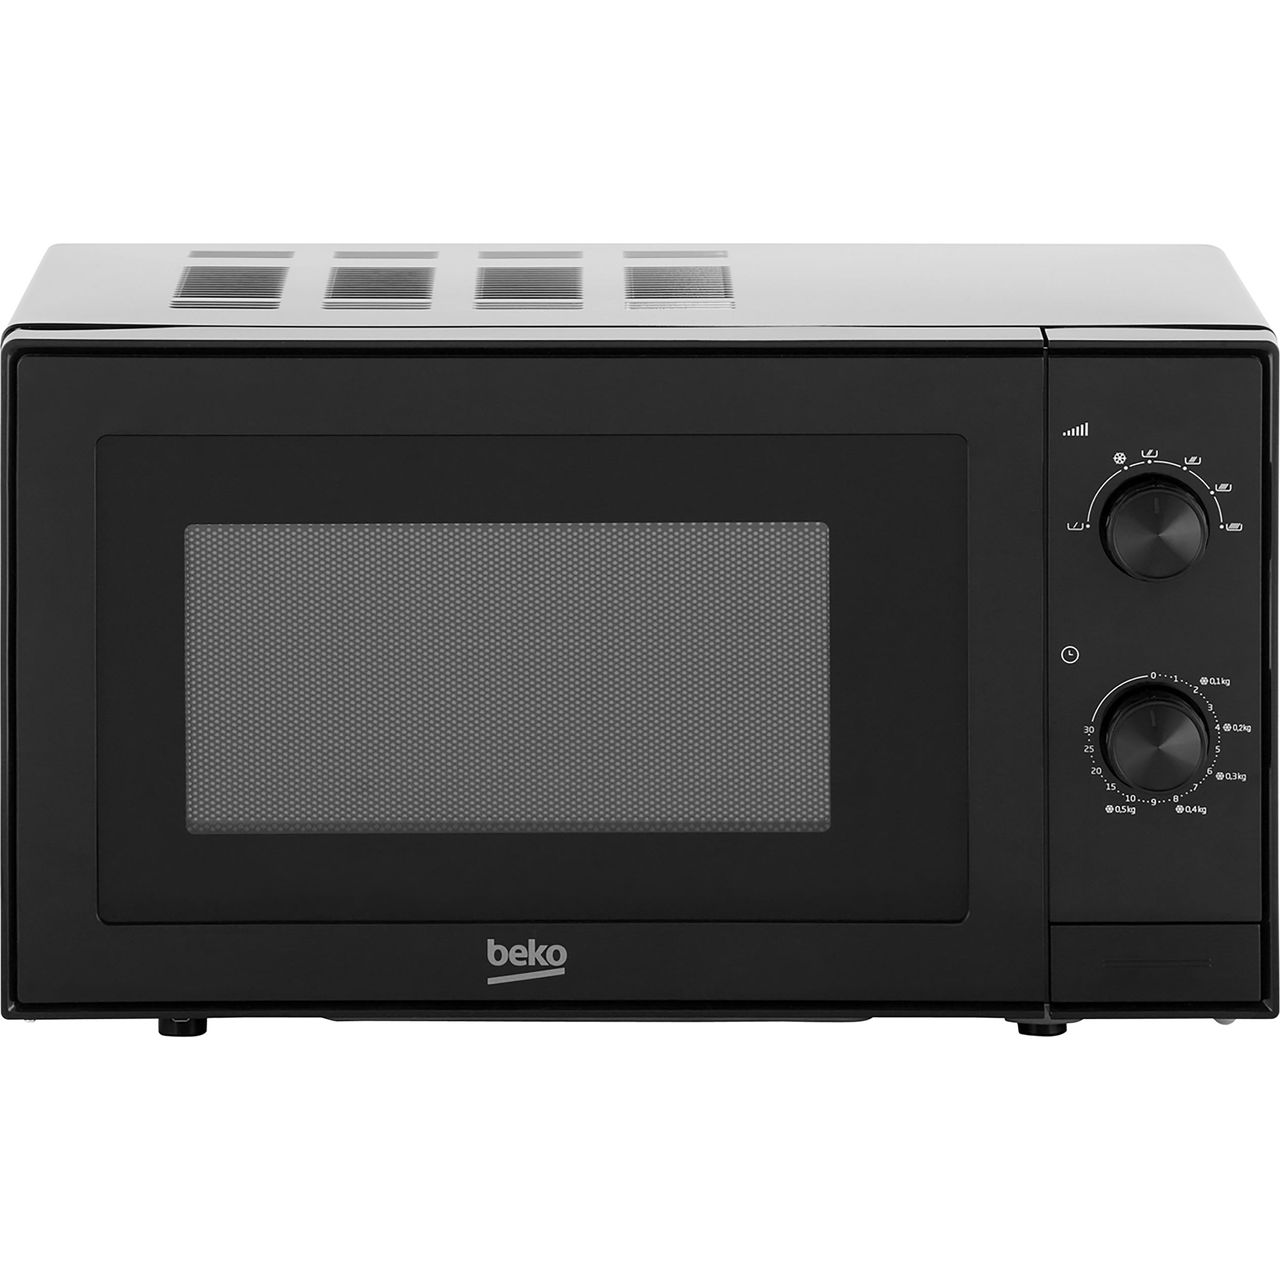 Beko MOC20100B 20 Litre Microwave Review